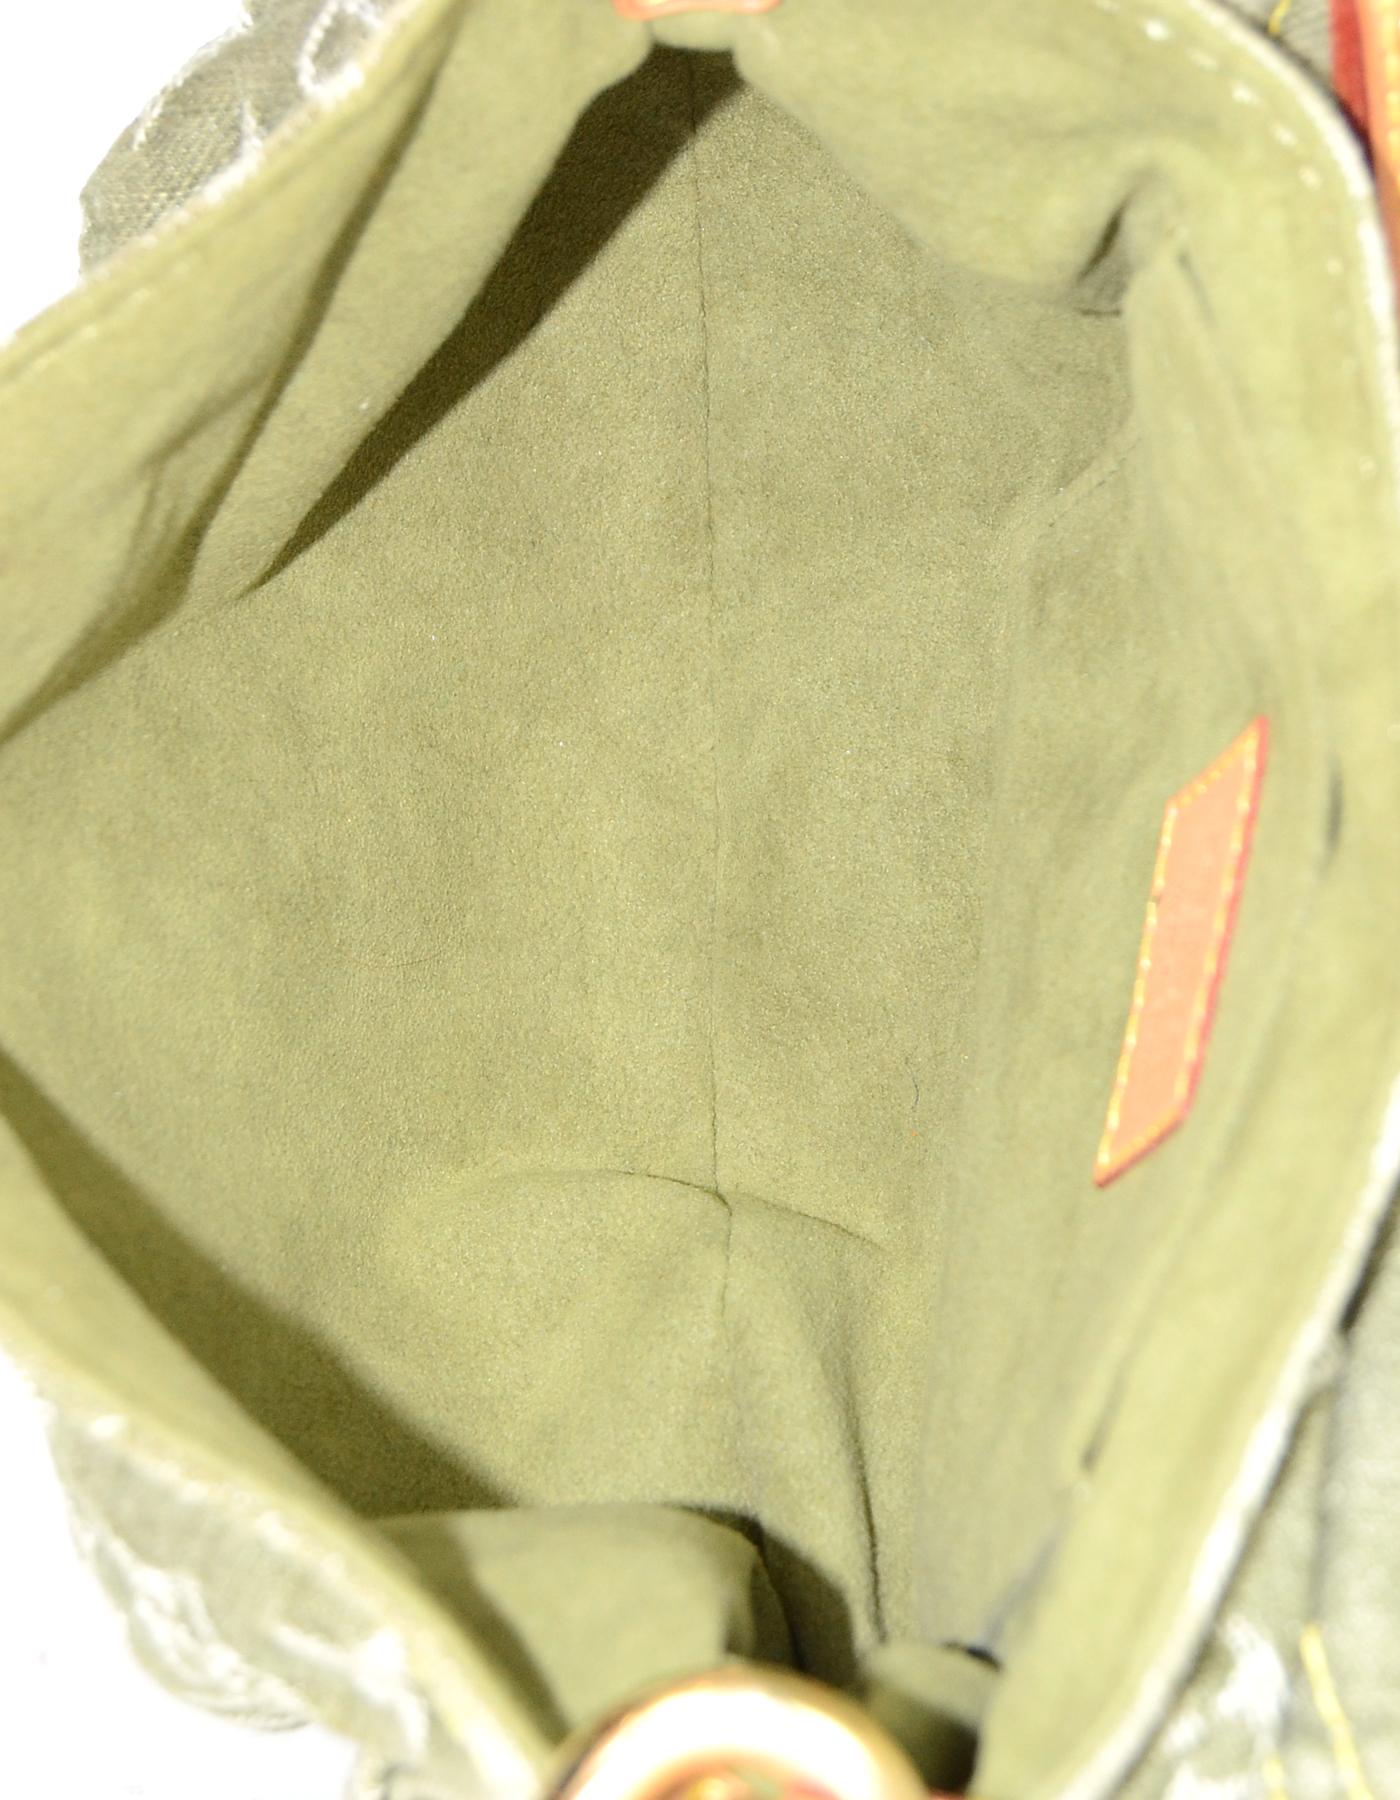 Louis Vuitton Green Monogram Denim Mini Pleaty Pochette Bag rt $845 In Excellent Condition In New York, NY